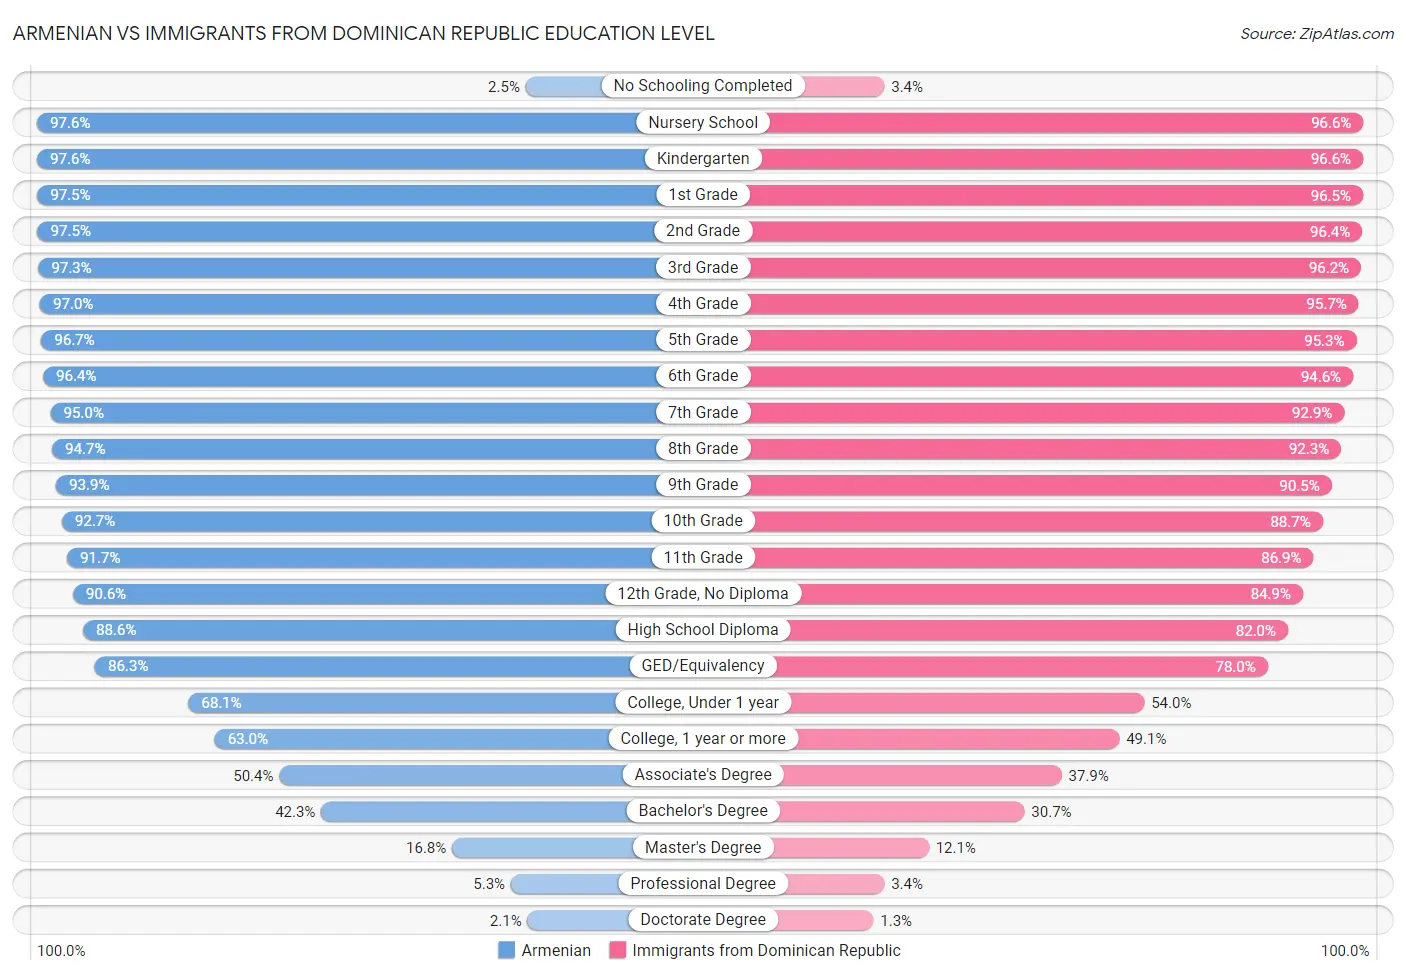 Armenian vs Immigrants from Dominican Republic Education Level